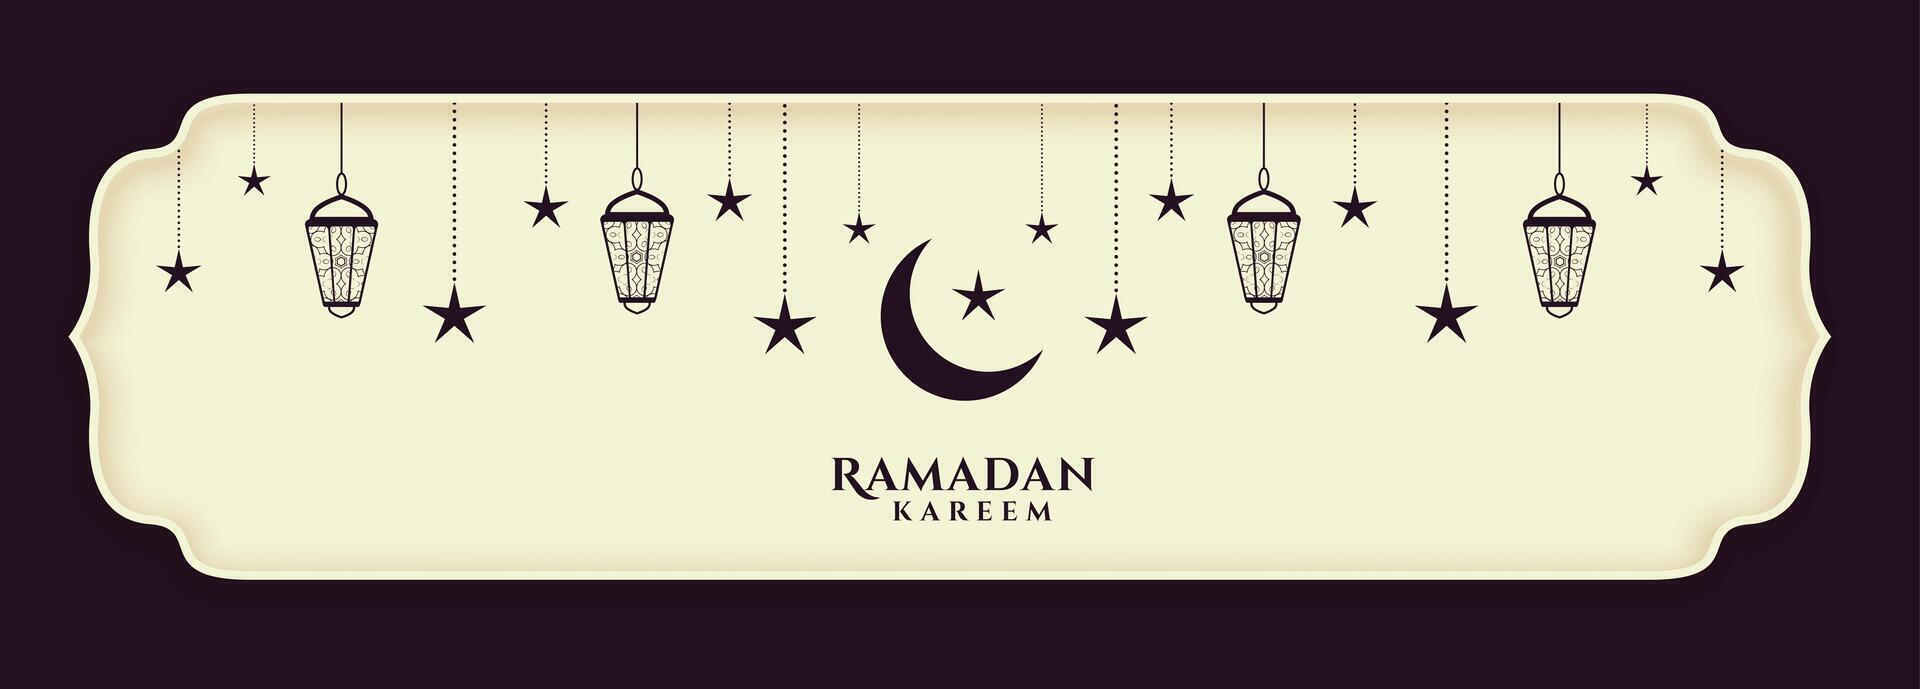 Ramadan kareem festival decoratief Islamitisch banier ontwerp vector